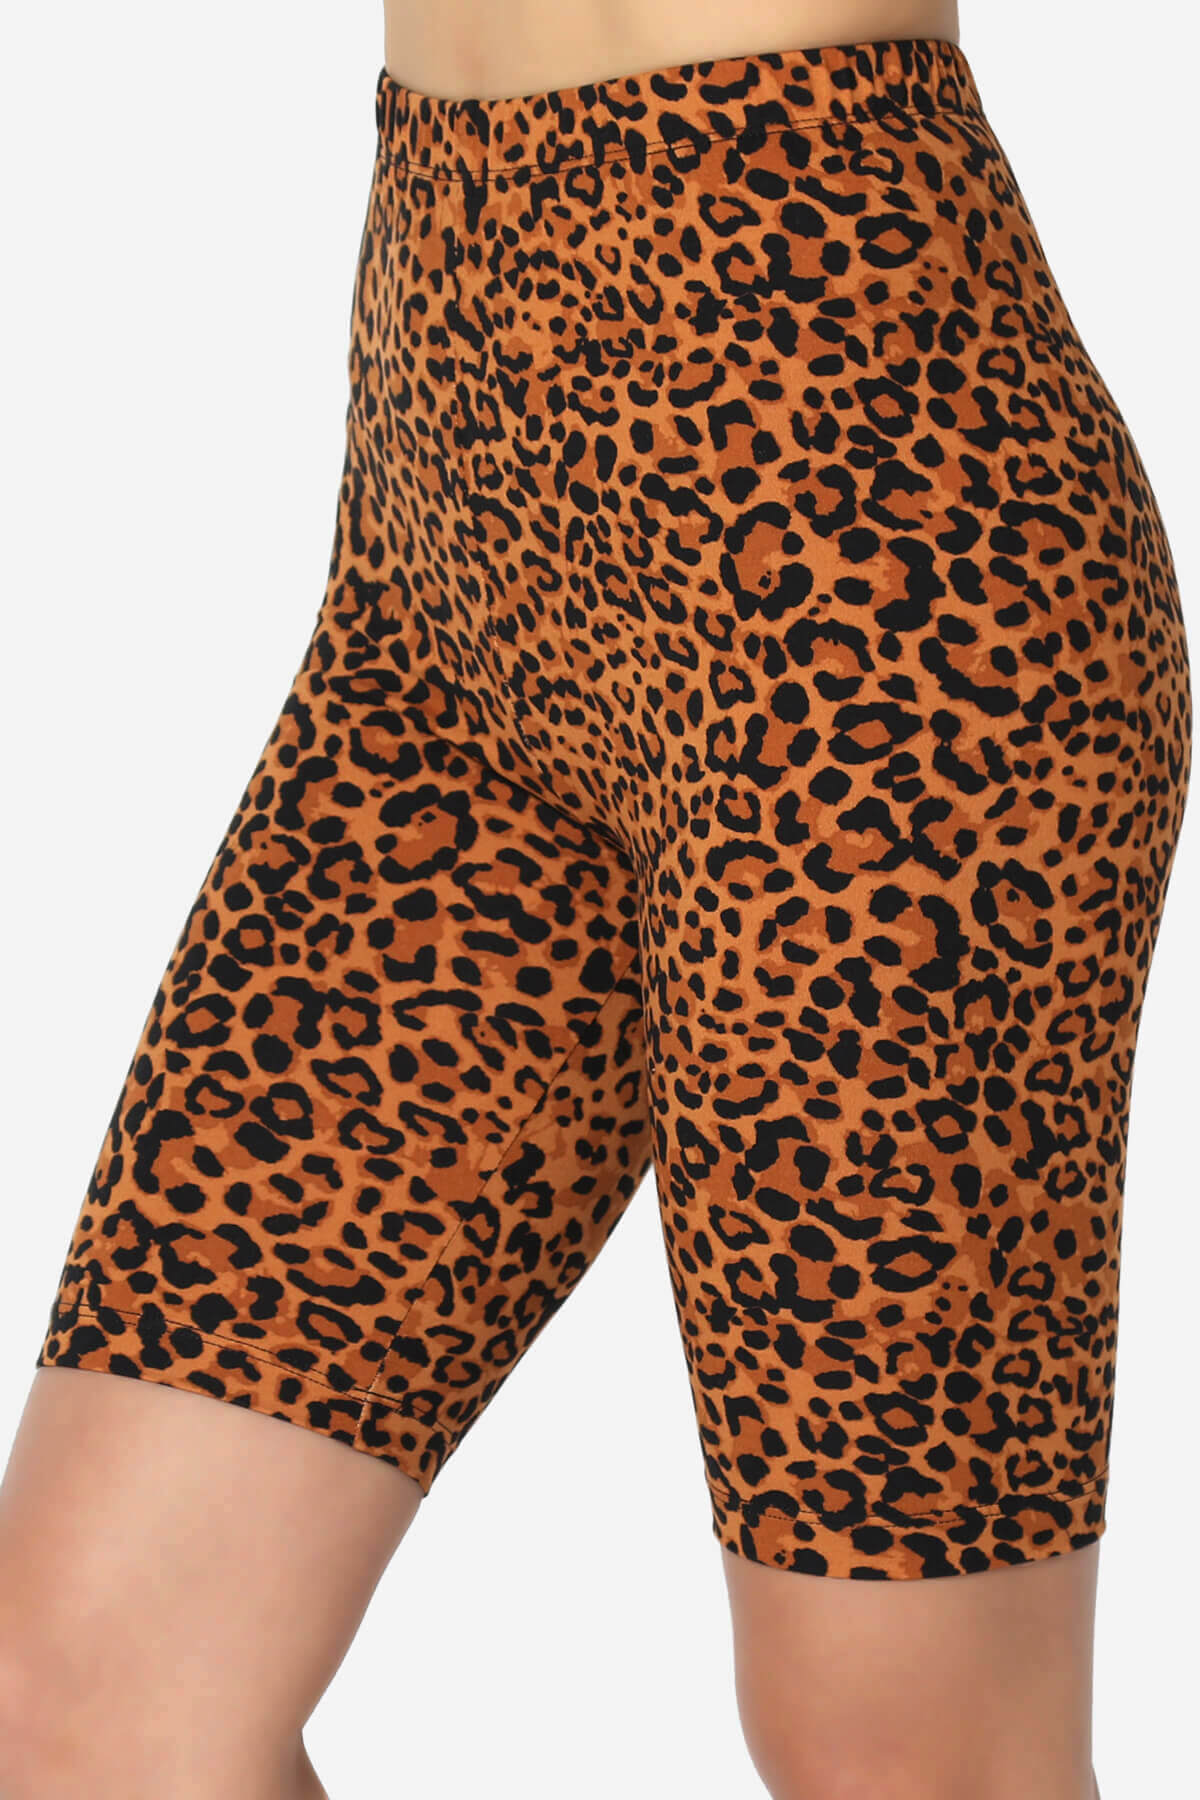 Load image into Gallery viewer, Michigan Cheetah Print Microfiber Bike Short Leggings ALMOND_5
